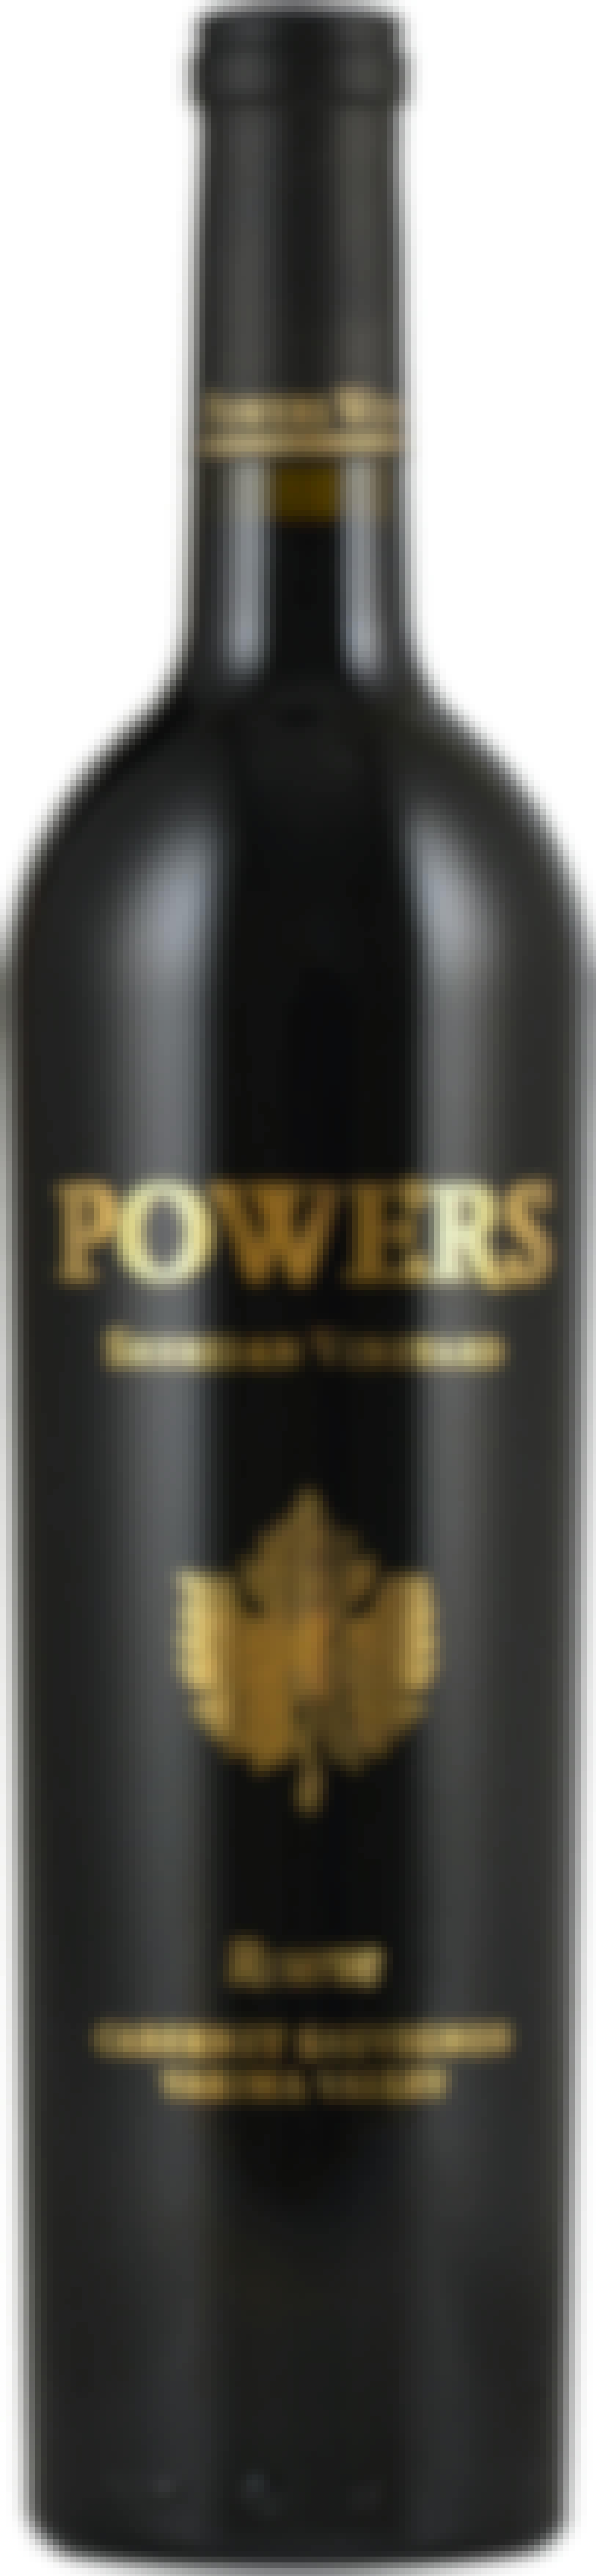 Powers Winery Sheridan Vineyard Reserve Cabernet Sauvignon 2016 750ml